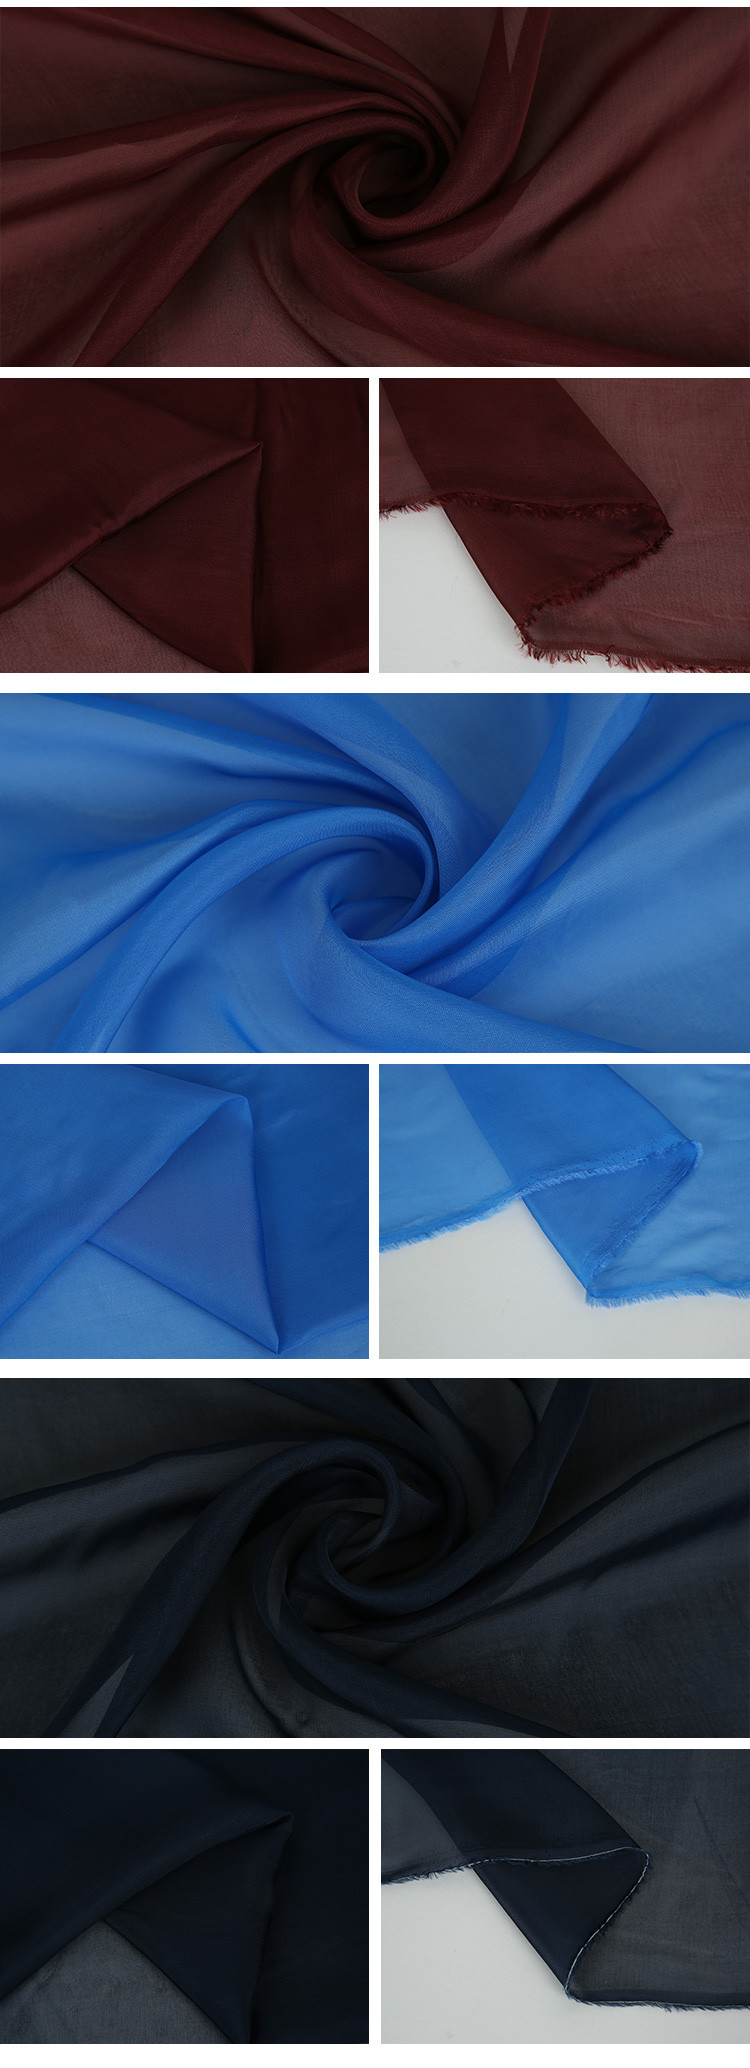 N29 Solid Color Blank T-Shirts Rayon Challis Fabric 70% Rayon